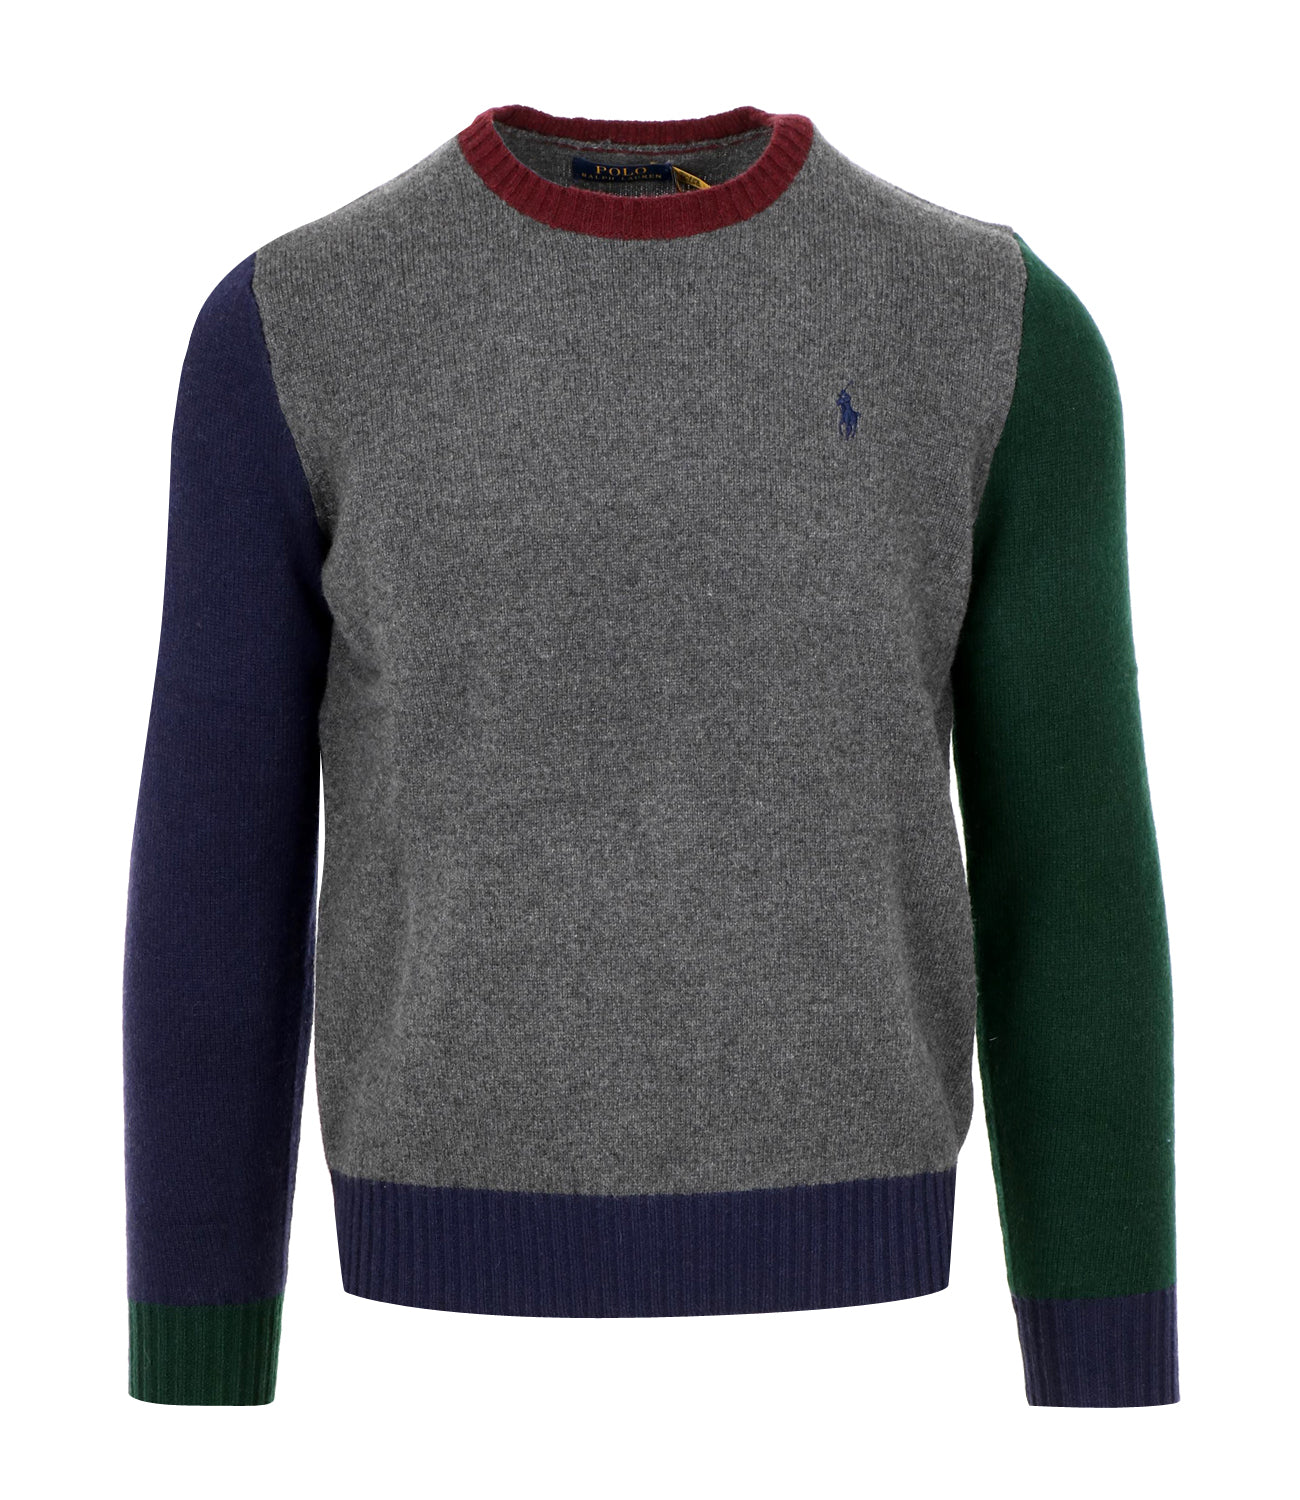 Polo Ralph Lauren | Charcoal, Green and Bordeaux Knitwear